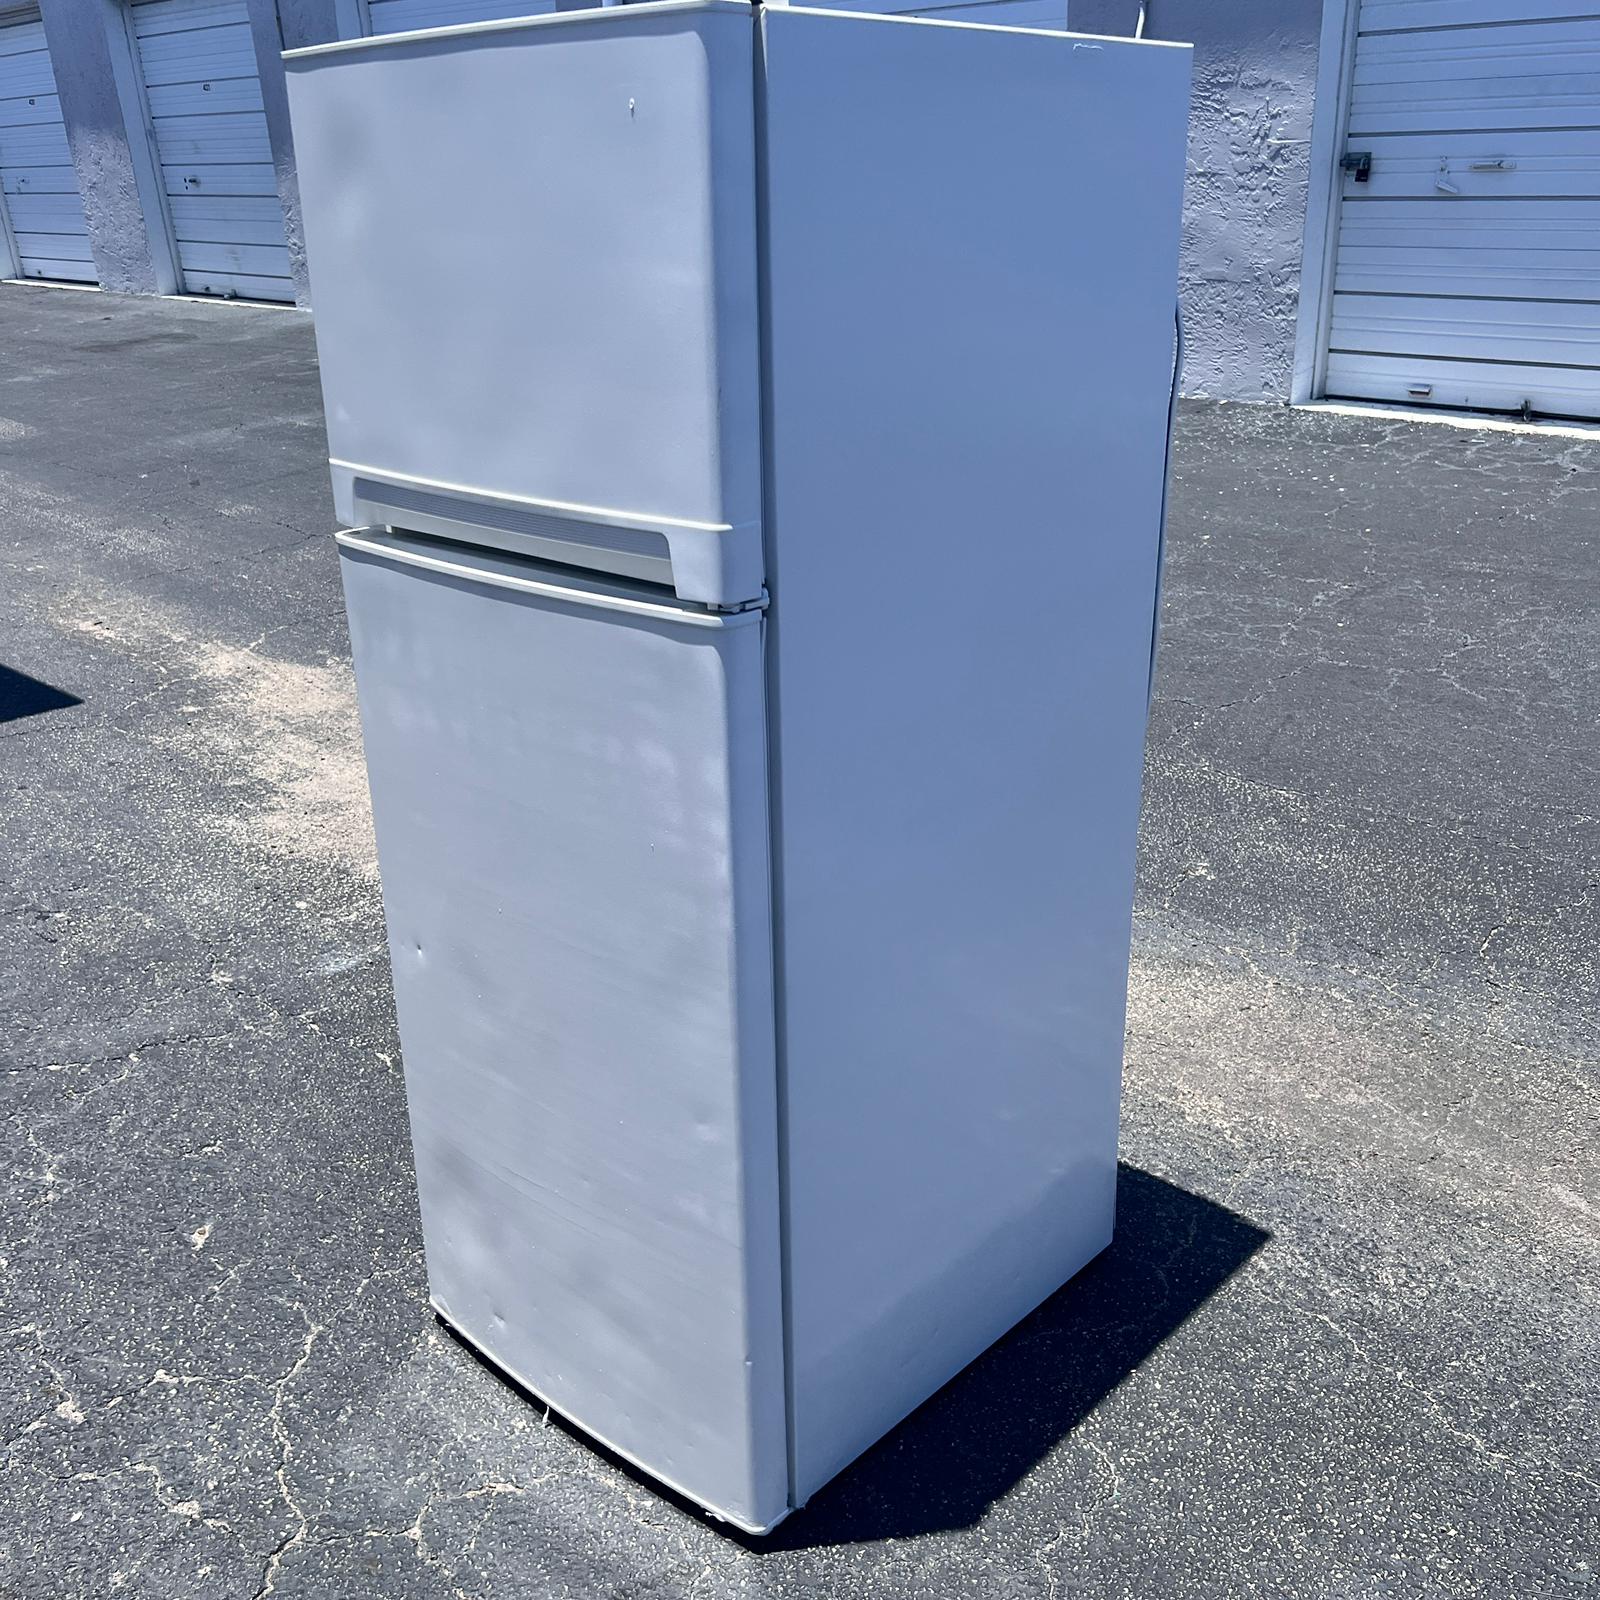 Haier Top and Bottom Refrigerator